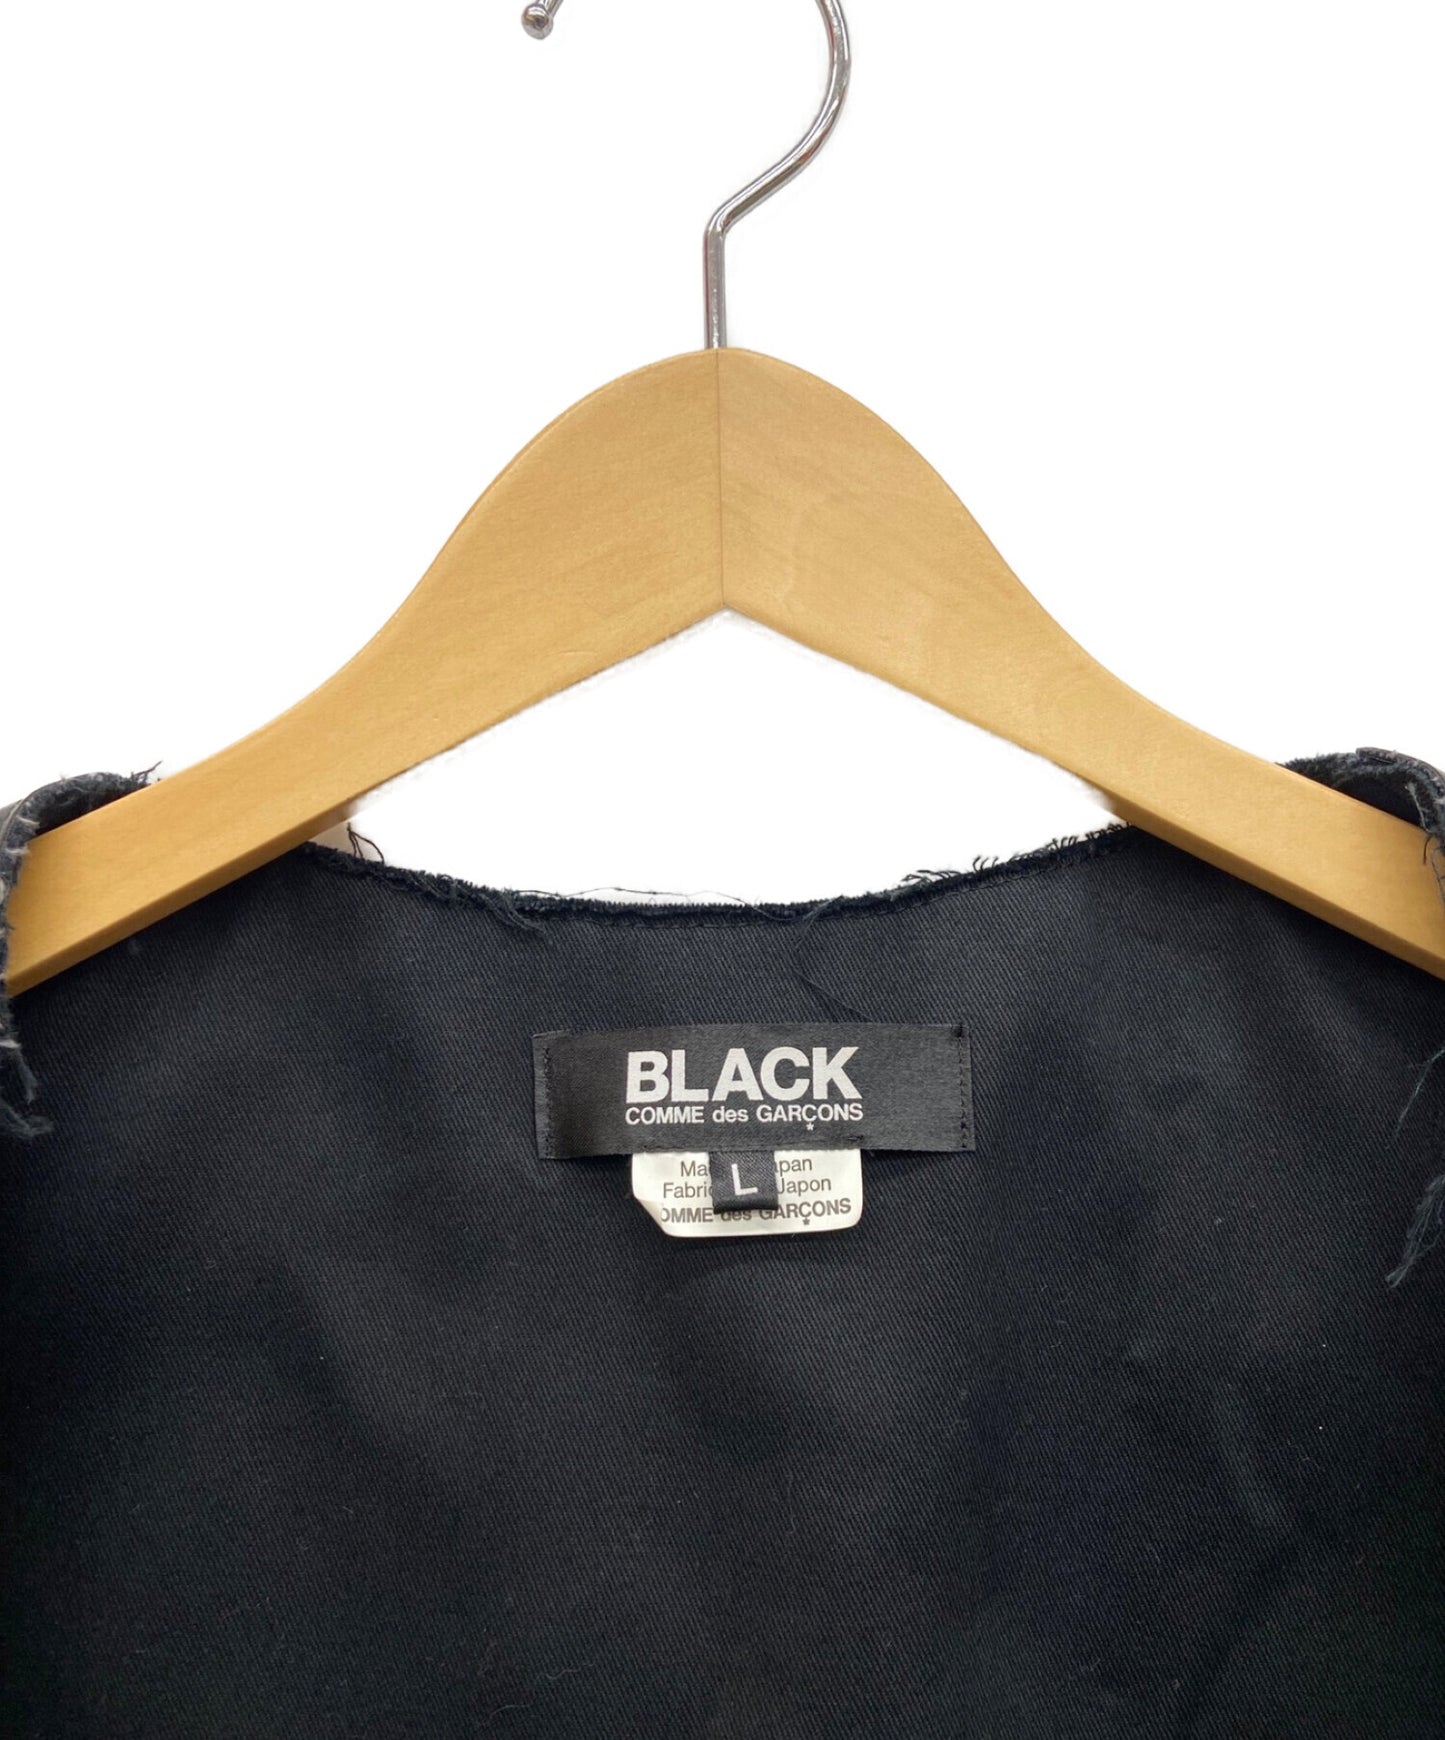 Black Comme des Garcons เสื้อกั๊กหนัง 1D-V001